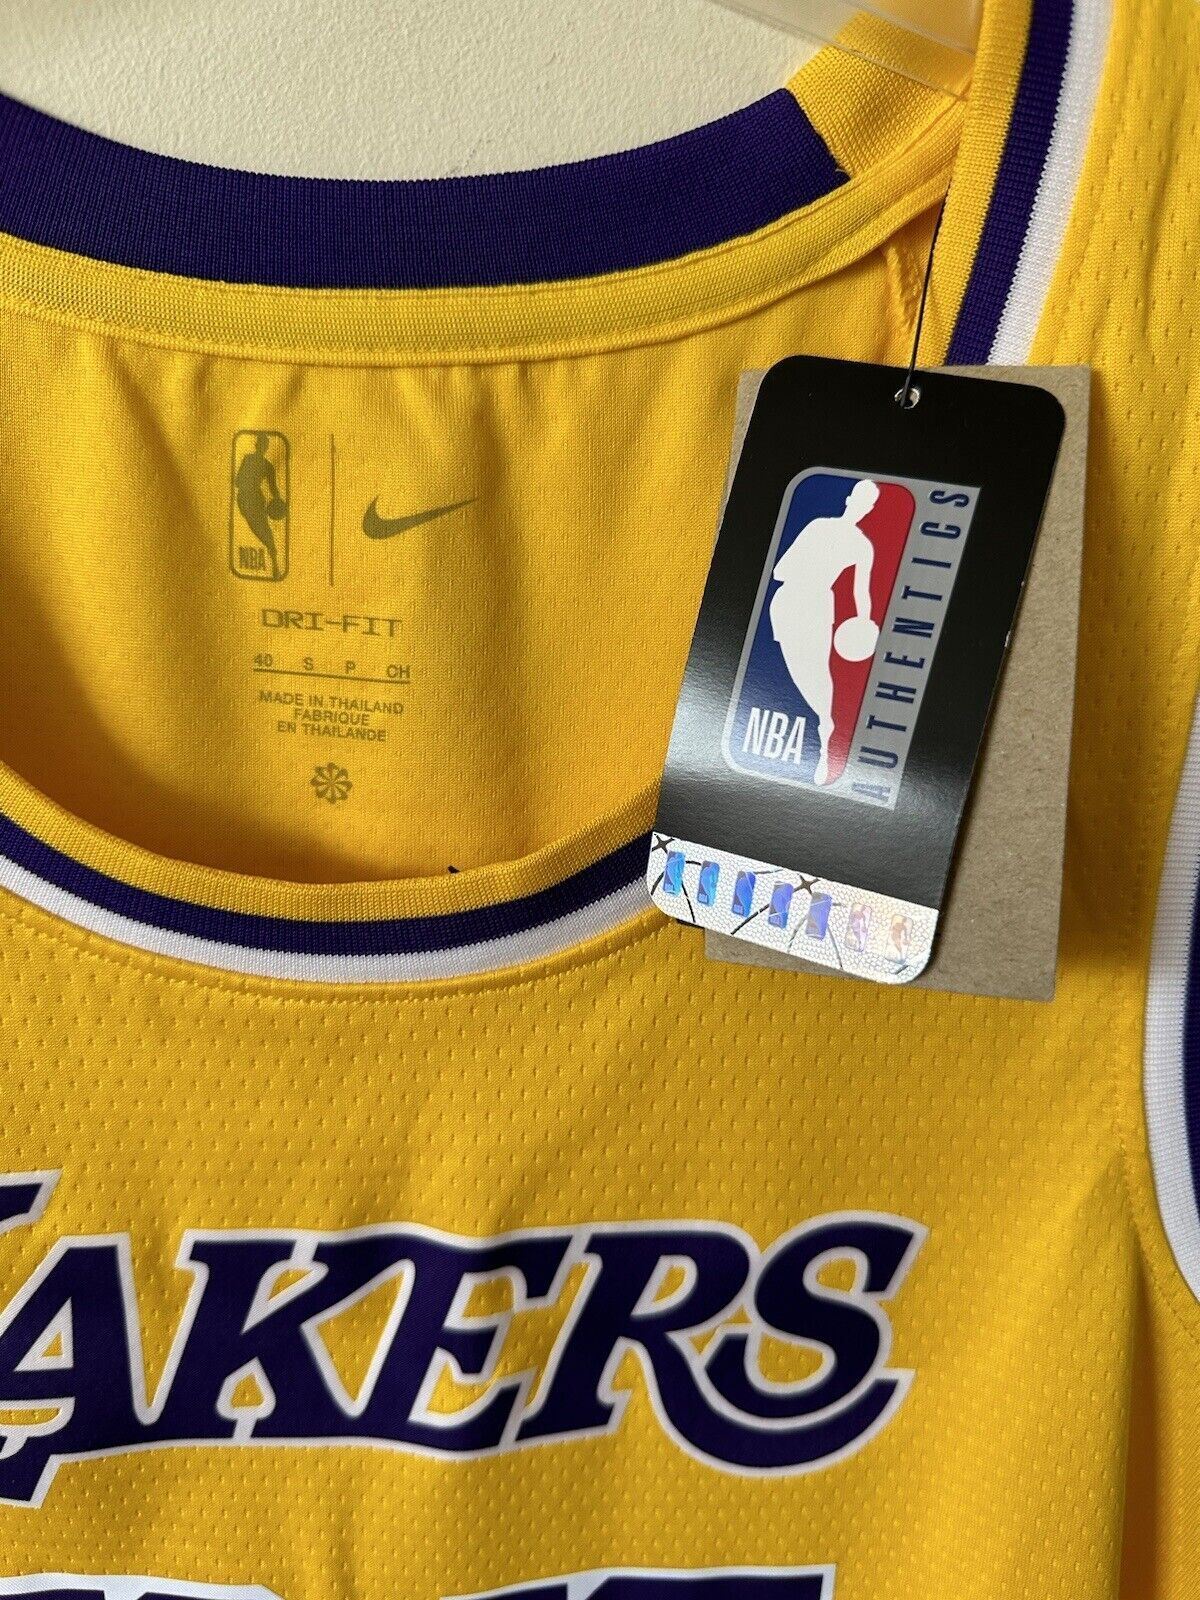 Nike NBA LA Lakers Icon Edition Jersey JOAKIM 27 Basketball Men’s Small